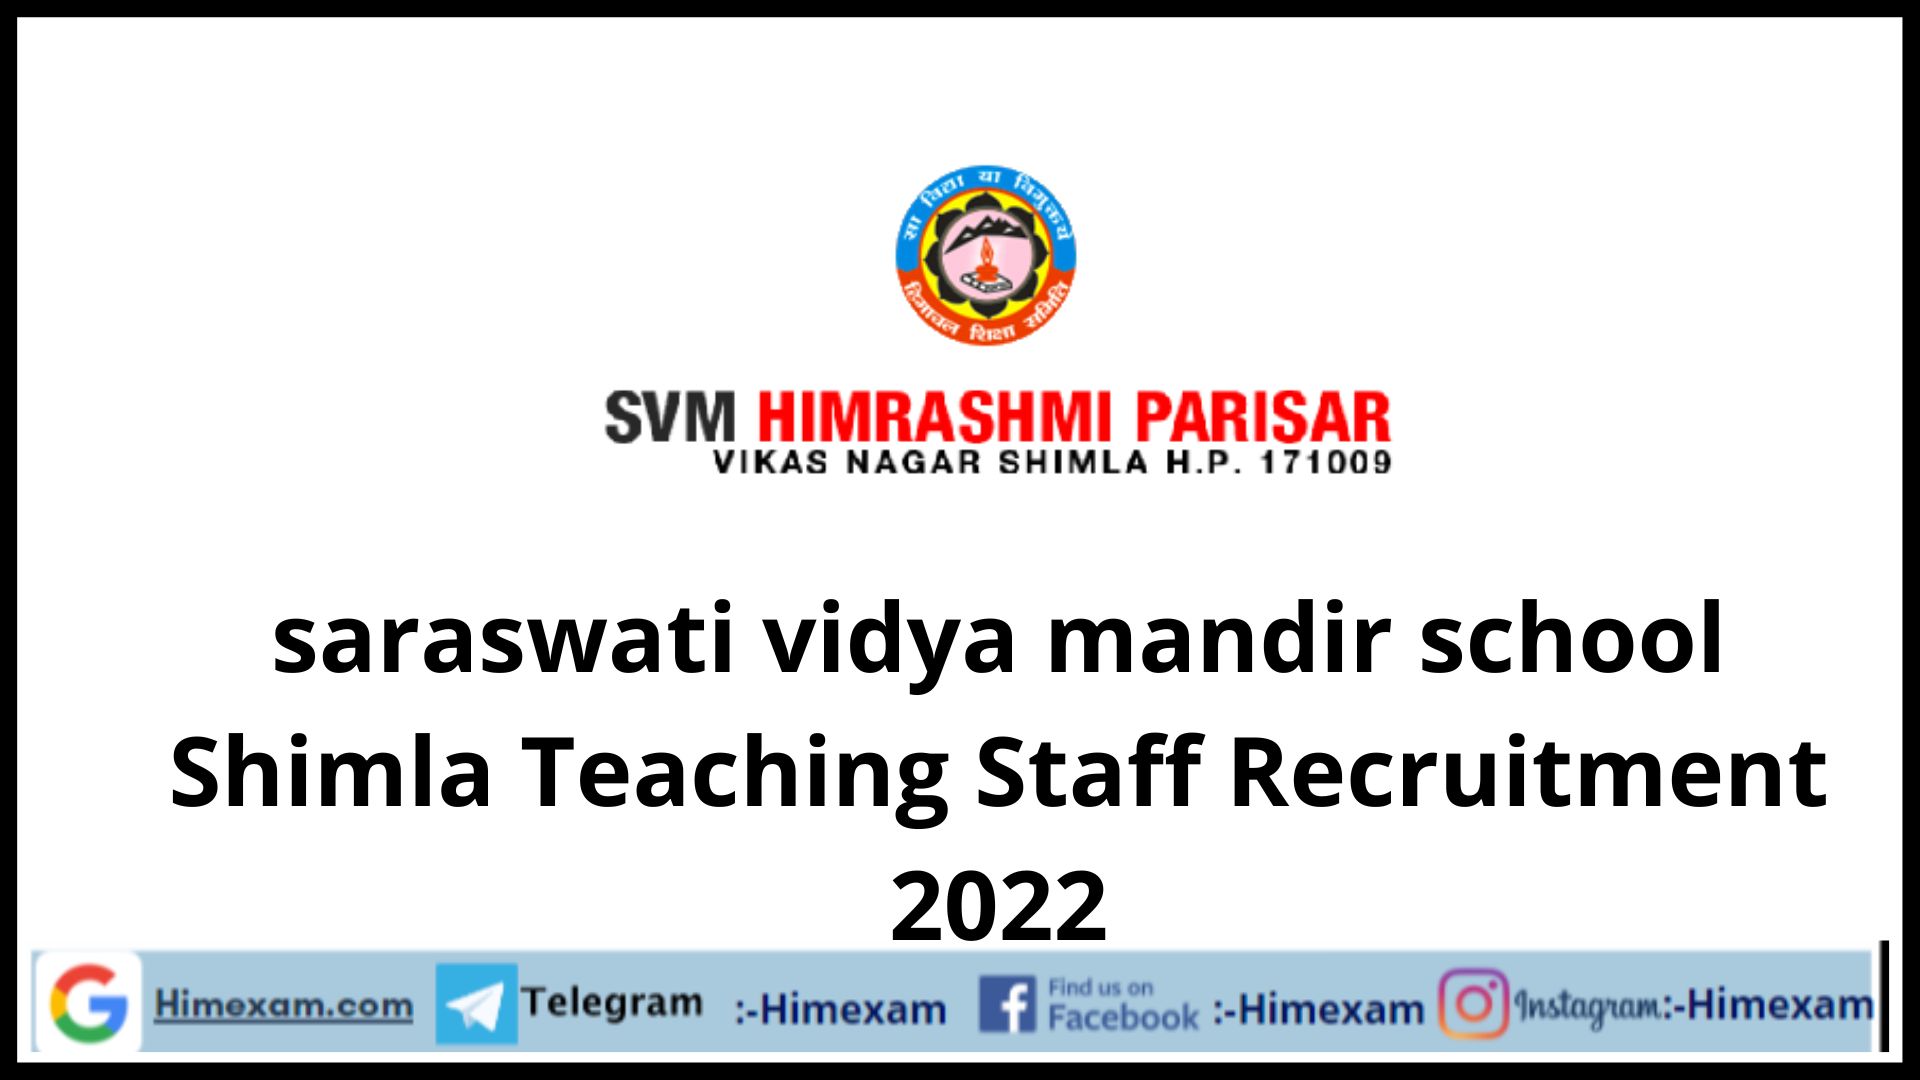 saraswati vidya mandir school Shimla Teaching Staff Recruitment 2022